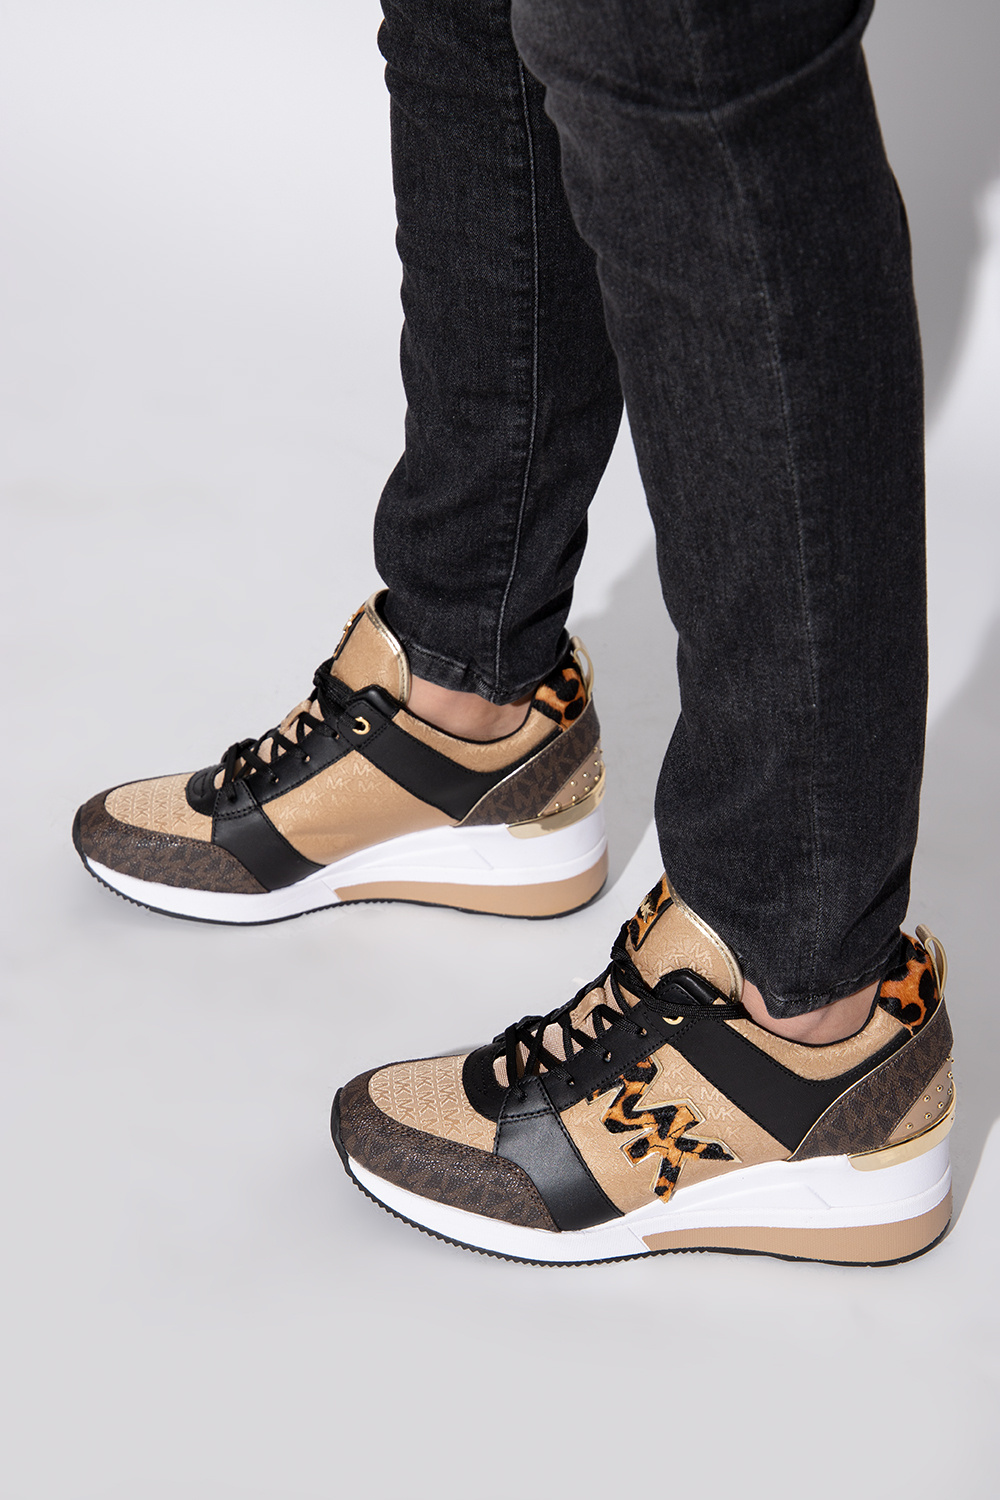 Michael Kors, Shoes, Womens Michael Kors Wedge Sneaker